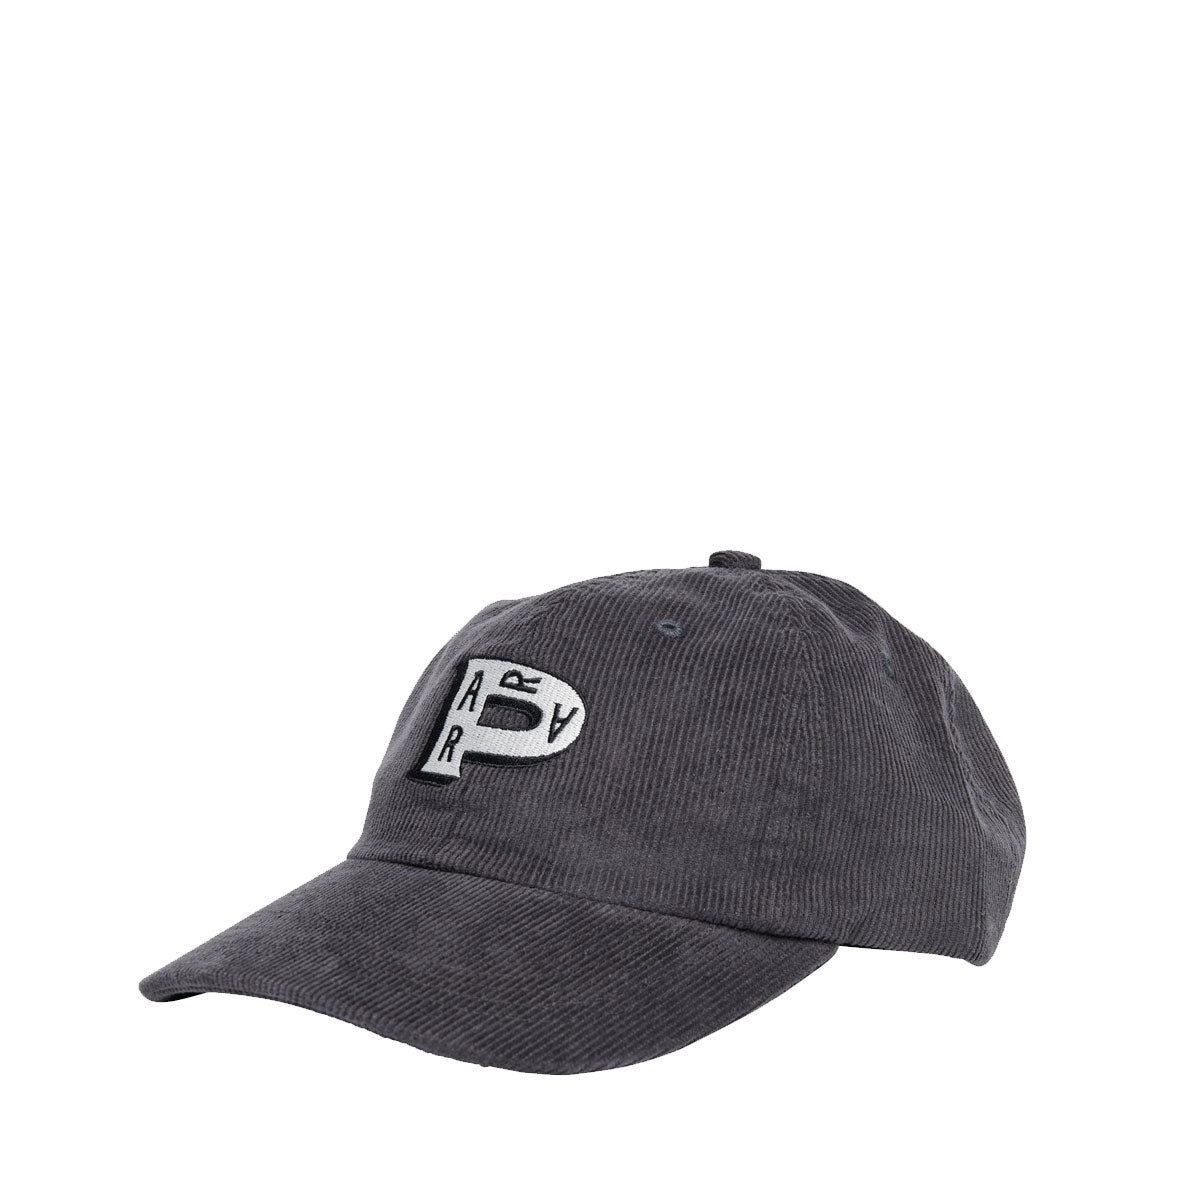 Parra Worked P 6 Panel Hat (Grau)  - Allike Store